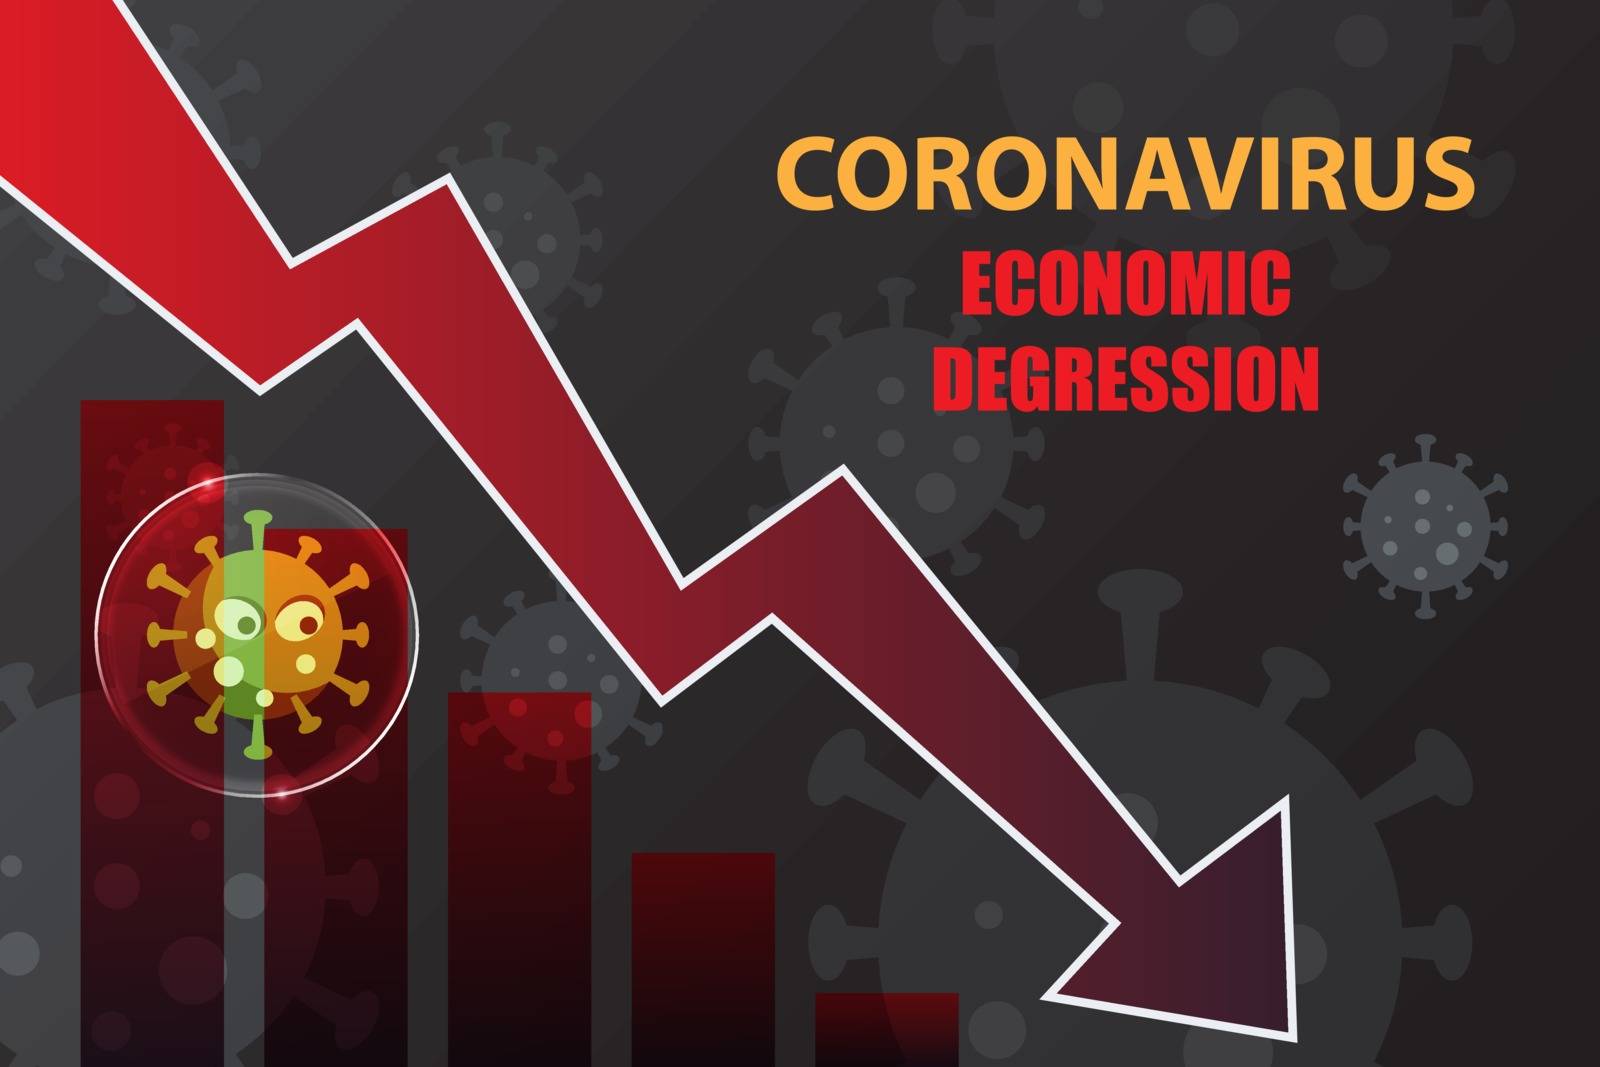 Economic crisis economy degression. Covid-19 coronavirus pandemi by atthameeni